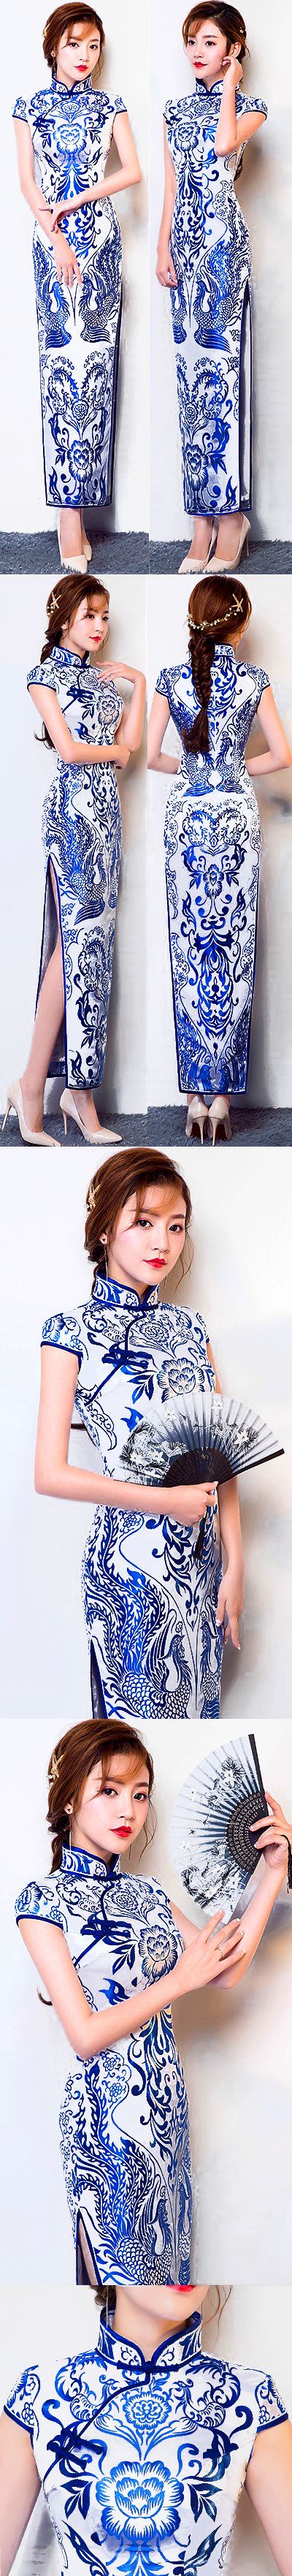 Cup-sleeve Long-length Evening-dress Cheongsam (RM)